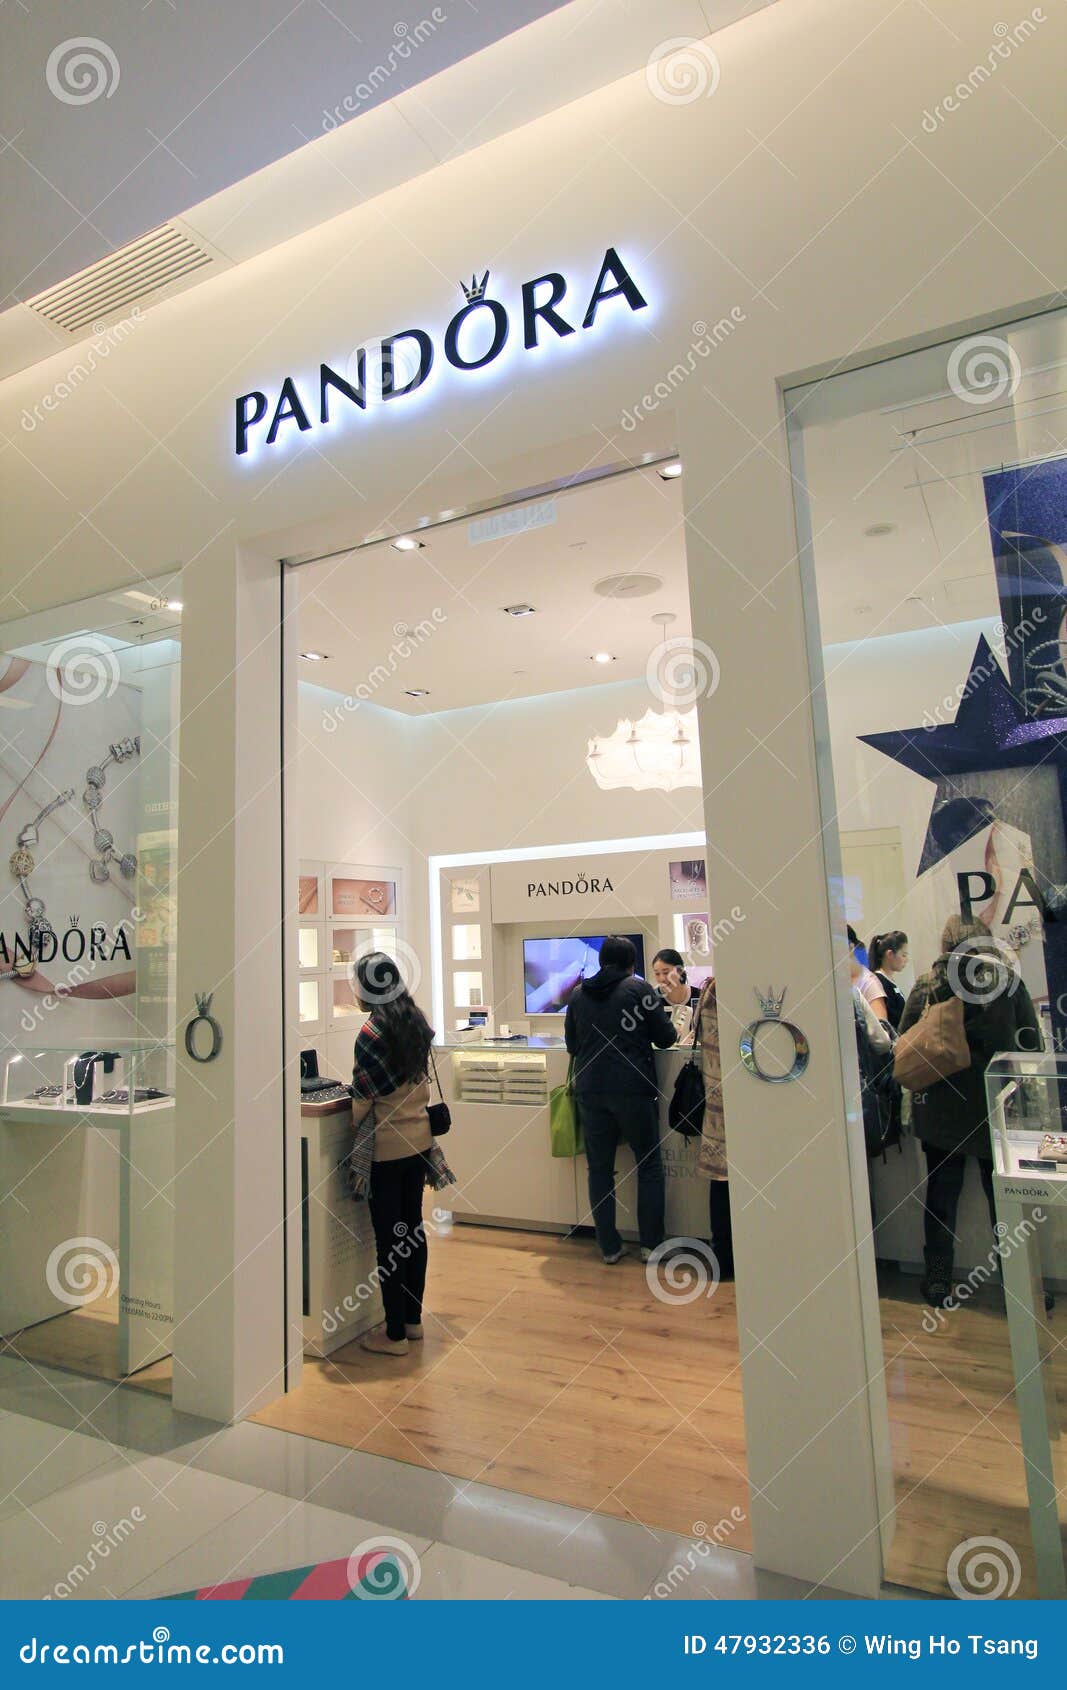 300 Pandora Shop Photos - Free & Royalty-Free Stock Photos from Dreamstime